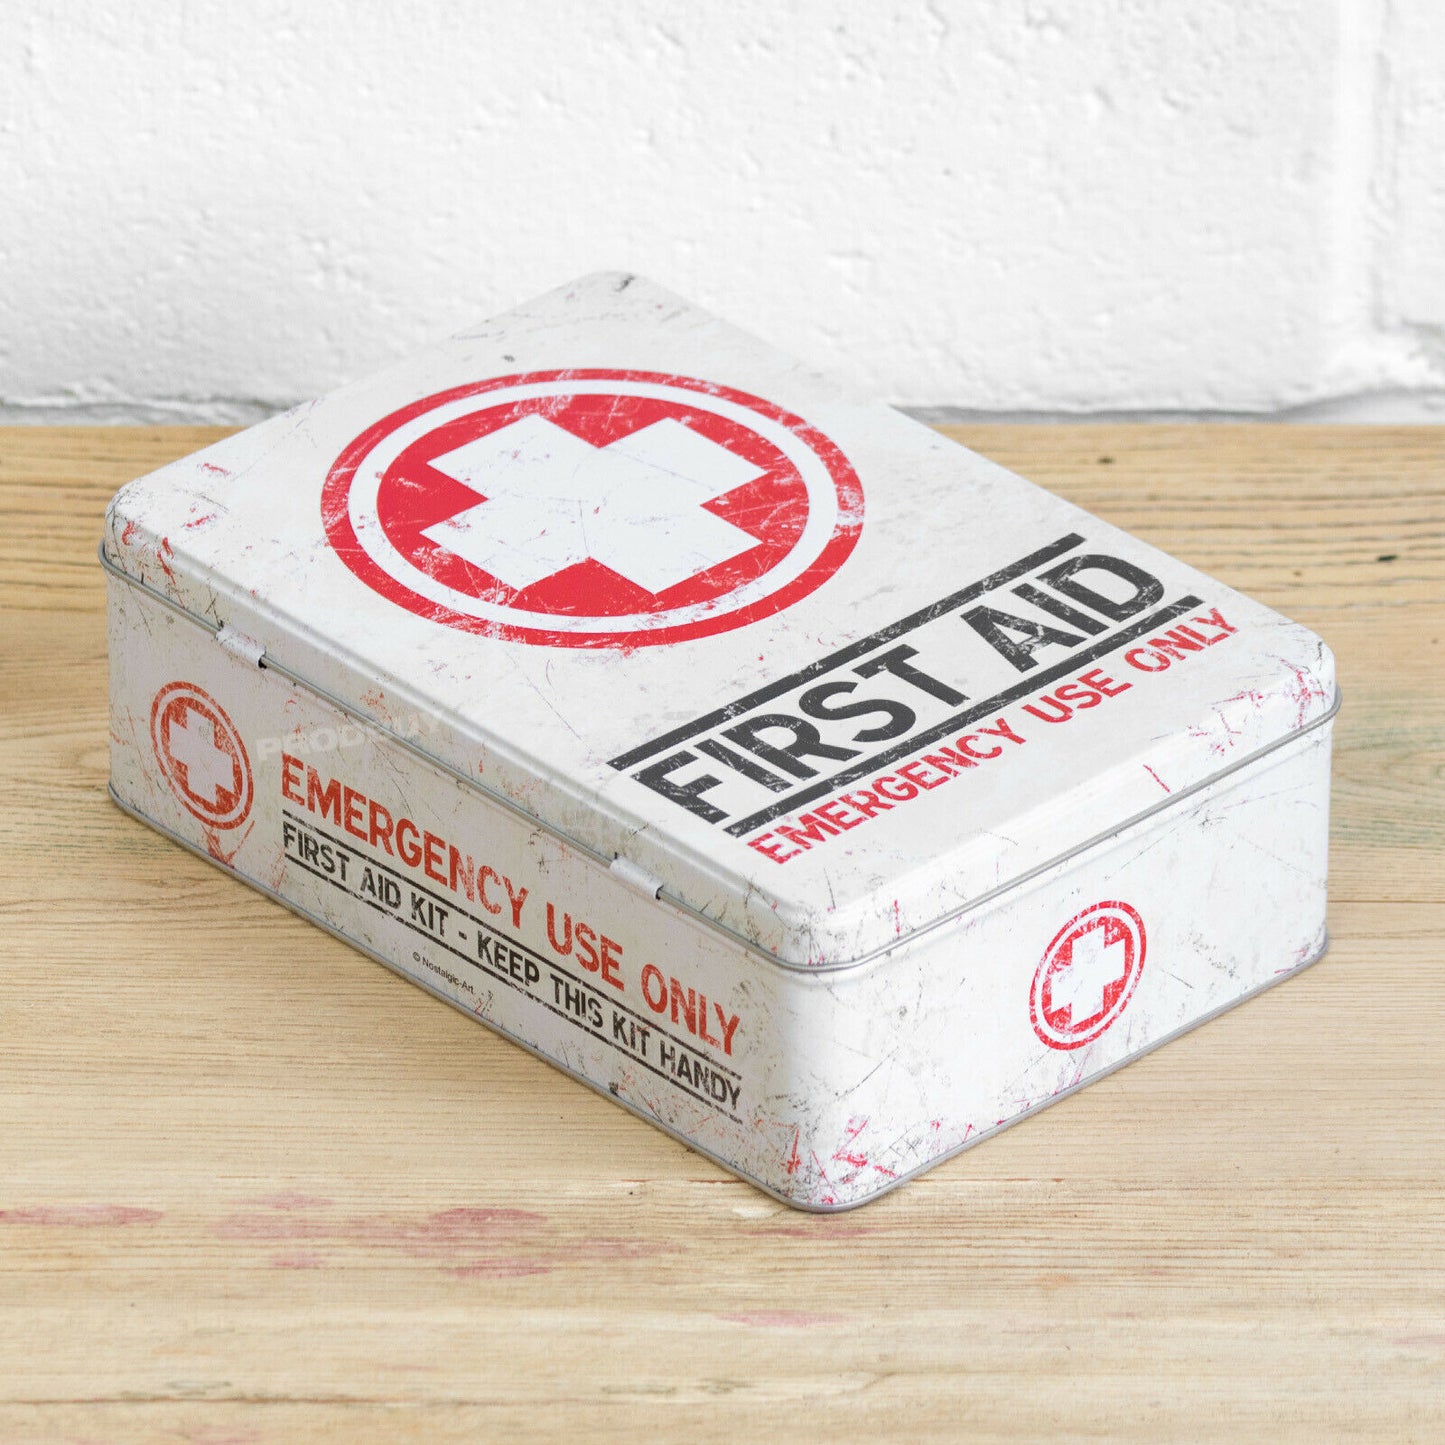 Retro 'First Aid' 2.5L Storage Tin Lunch Box